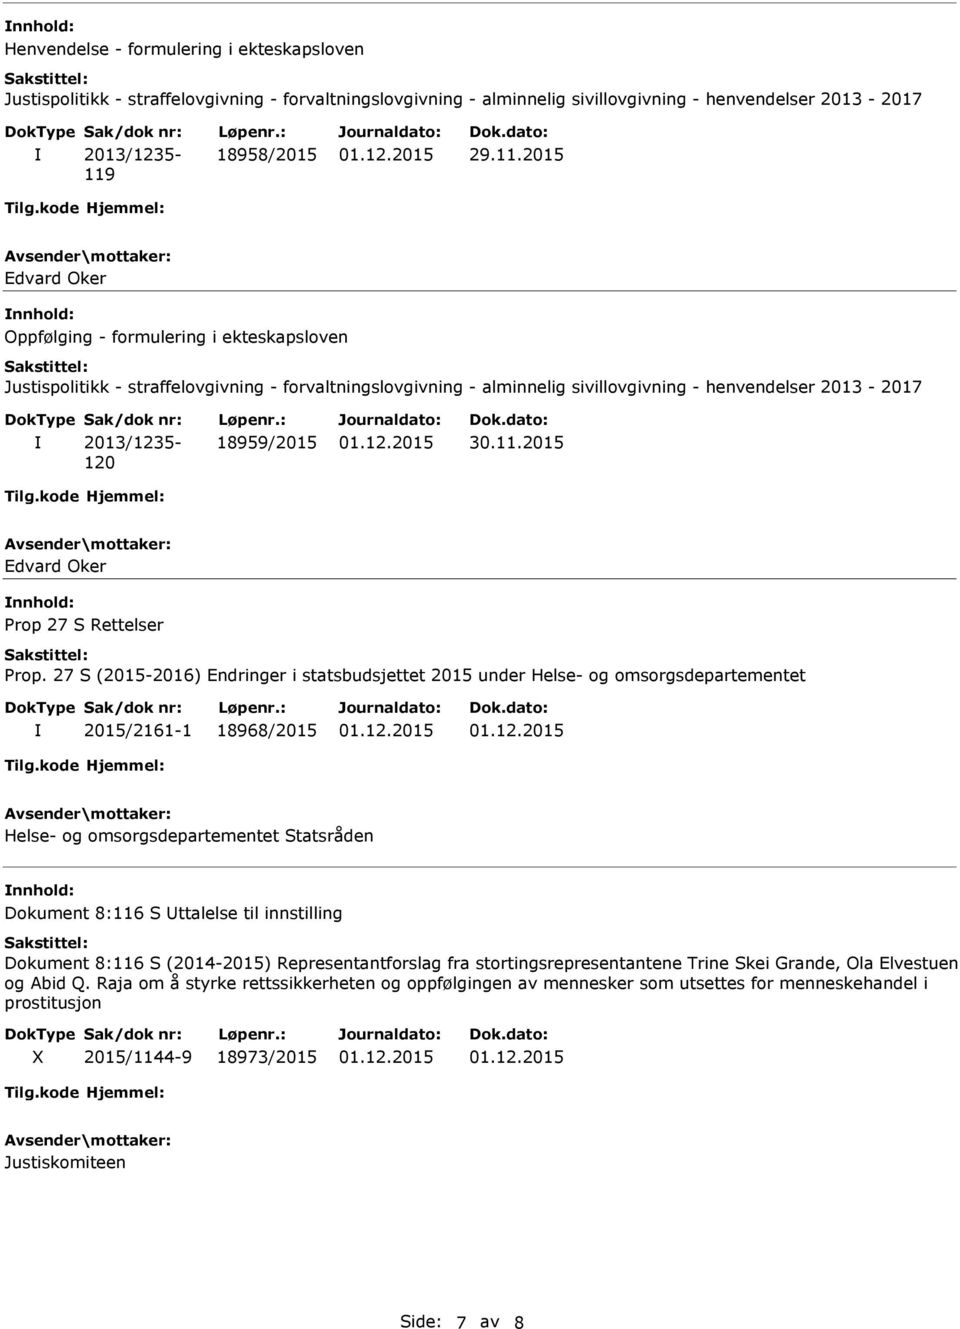 2015 Edvard Oker nnhold: Oppfølging - formulering i ekteskapsloven Justispolitikk - straffelovgivning - forvaltningslovgivning - alminnelig sivillovgivning - henvendelser 2013-2017 2013/1235-120